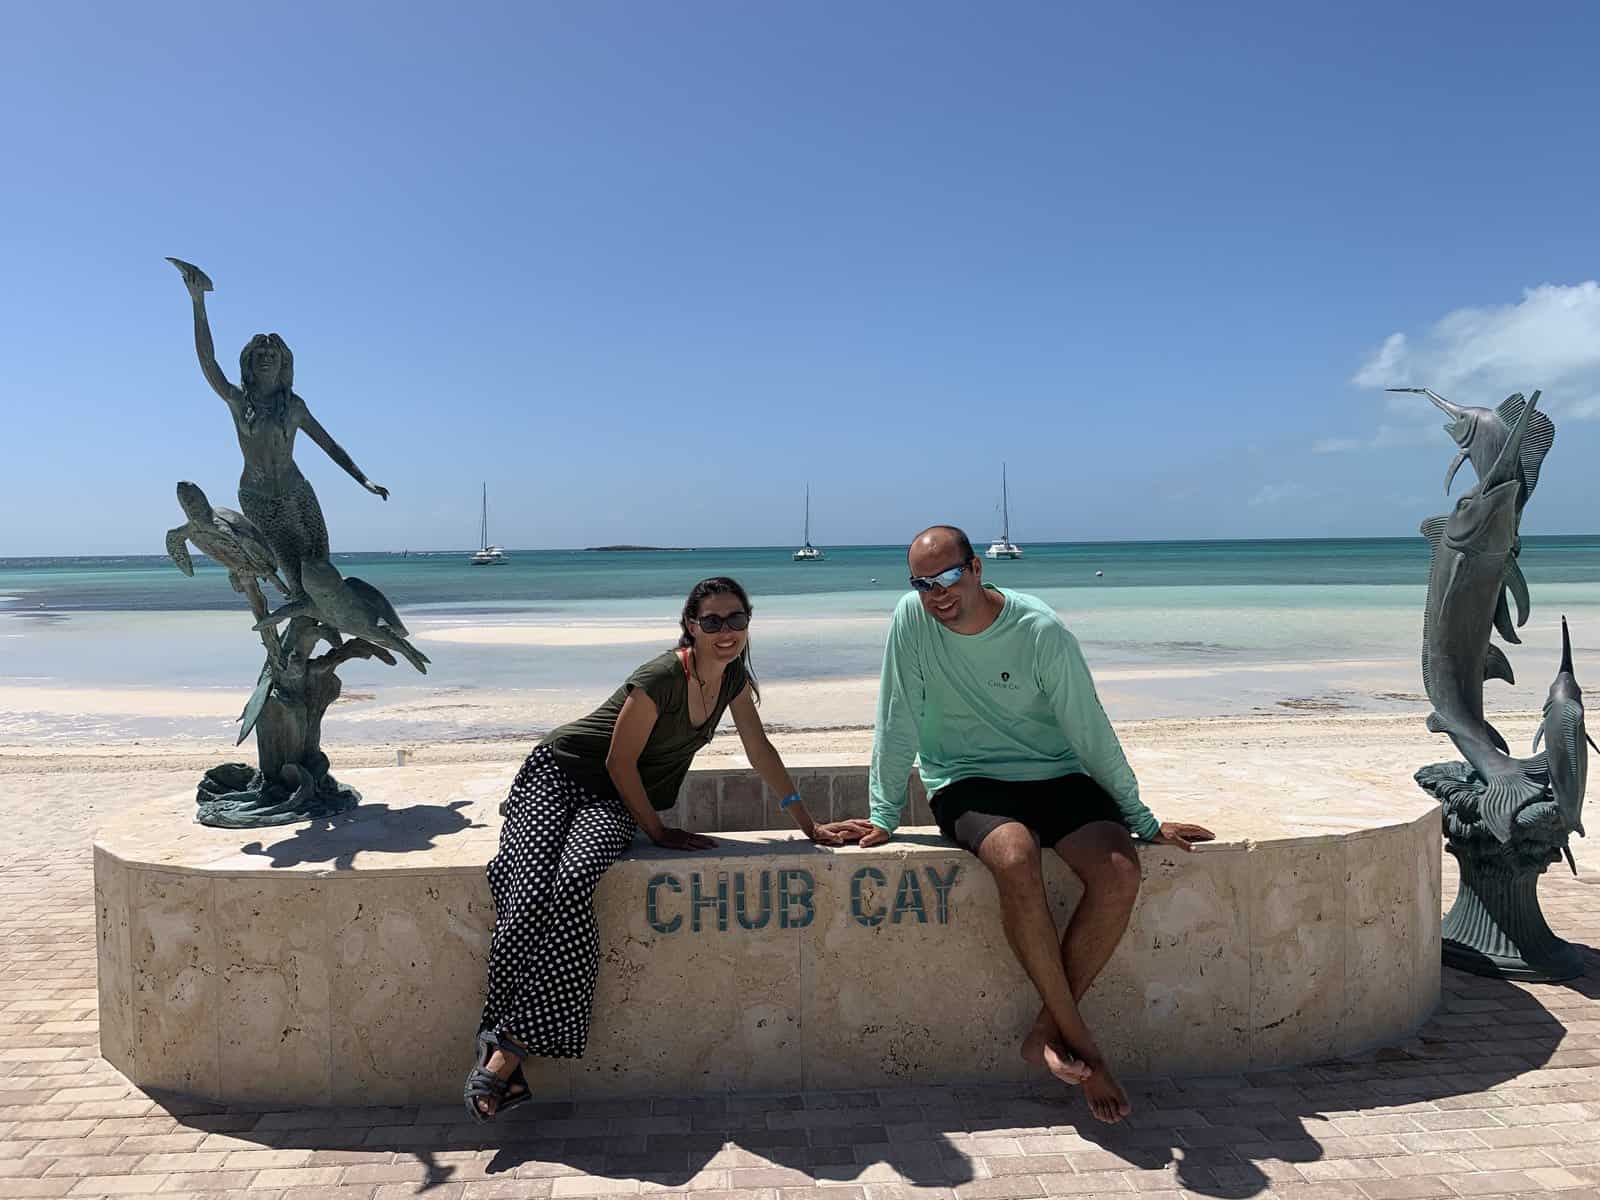 a man and a woman at Chub Cay, wearing sunglasses